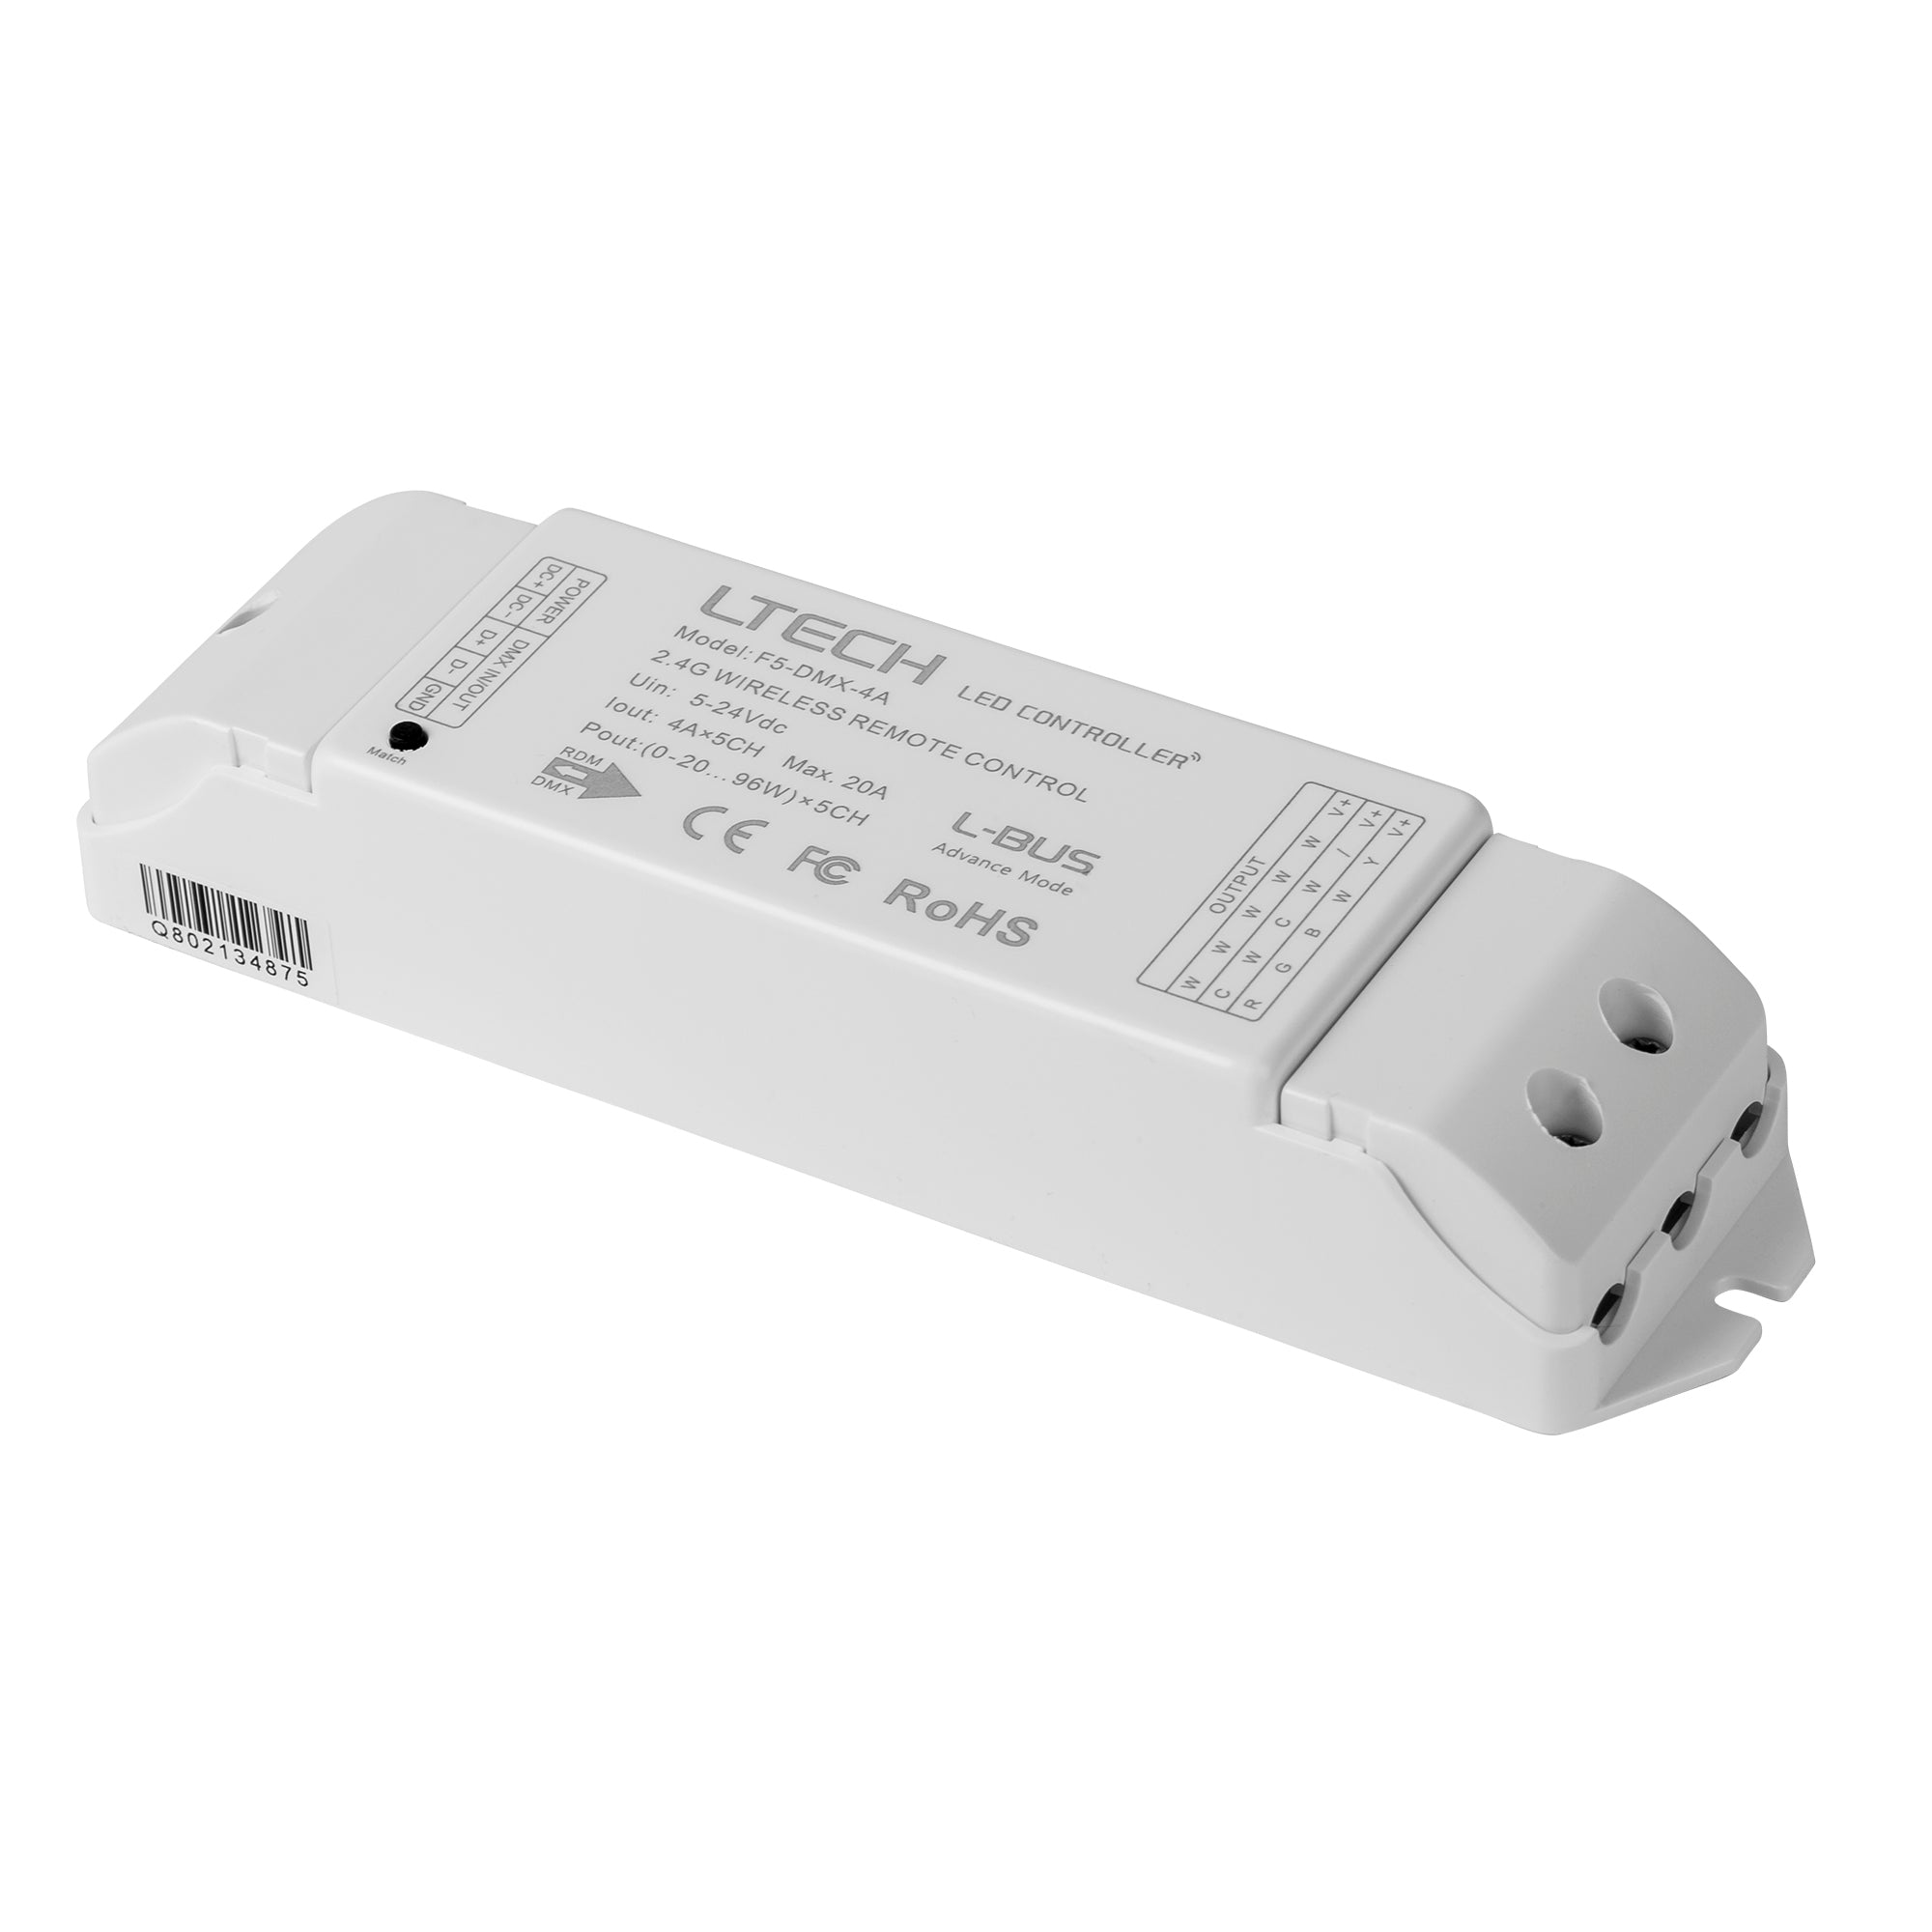 HV9103-F5-DMX-4A - 5 Channel LED Strip Receiver